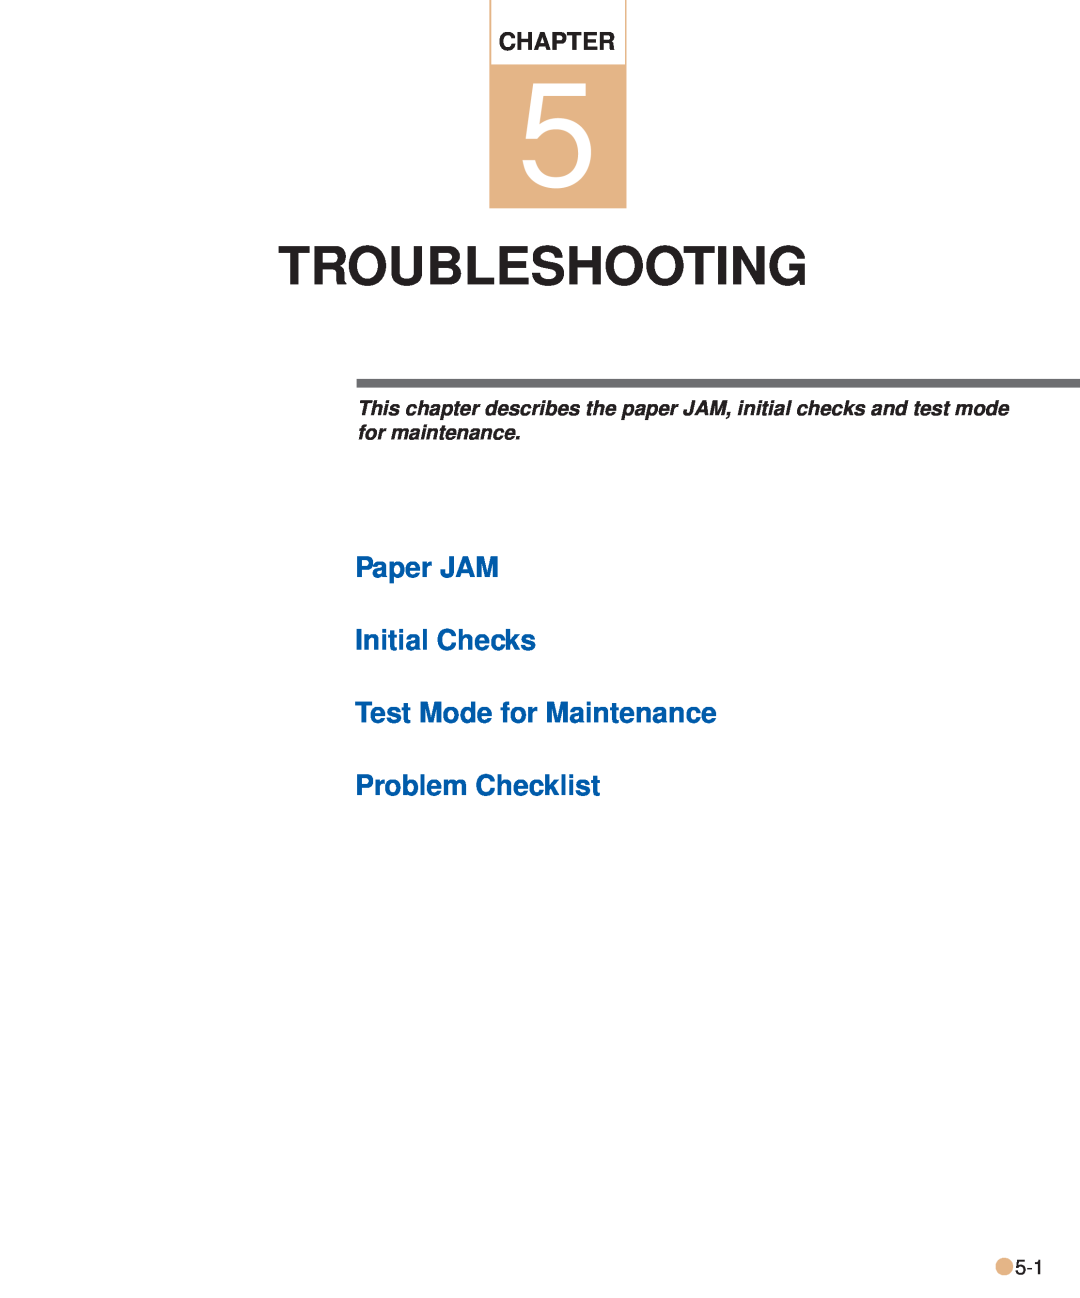 Fujitsu M3093DE/DG manual Troubleshooting, Paper JAM Initial Checks Test Mode for Maintenance Problem Checklist, Chapter 